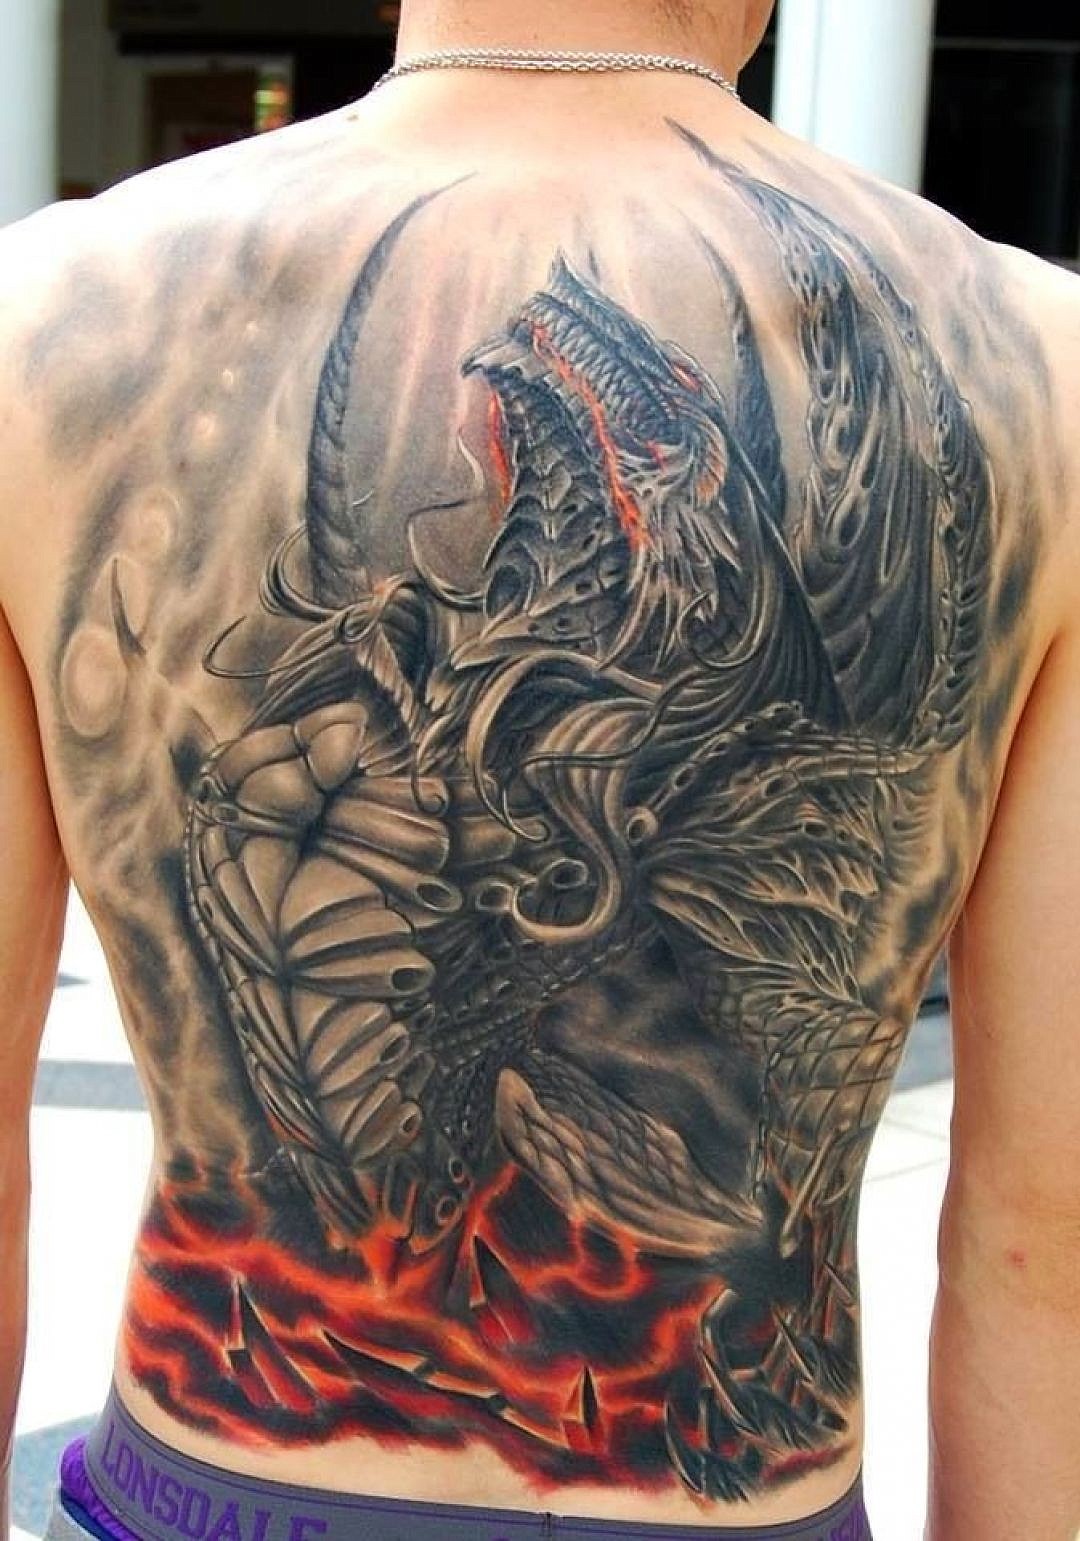 99IMAGES.COM 
 Tattoo of an evil dragon.